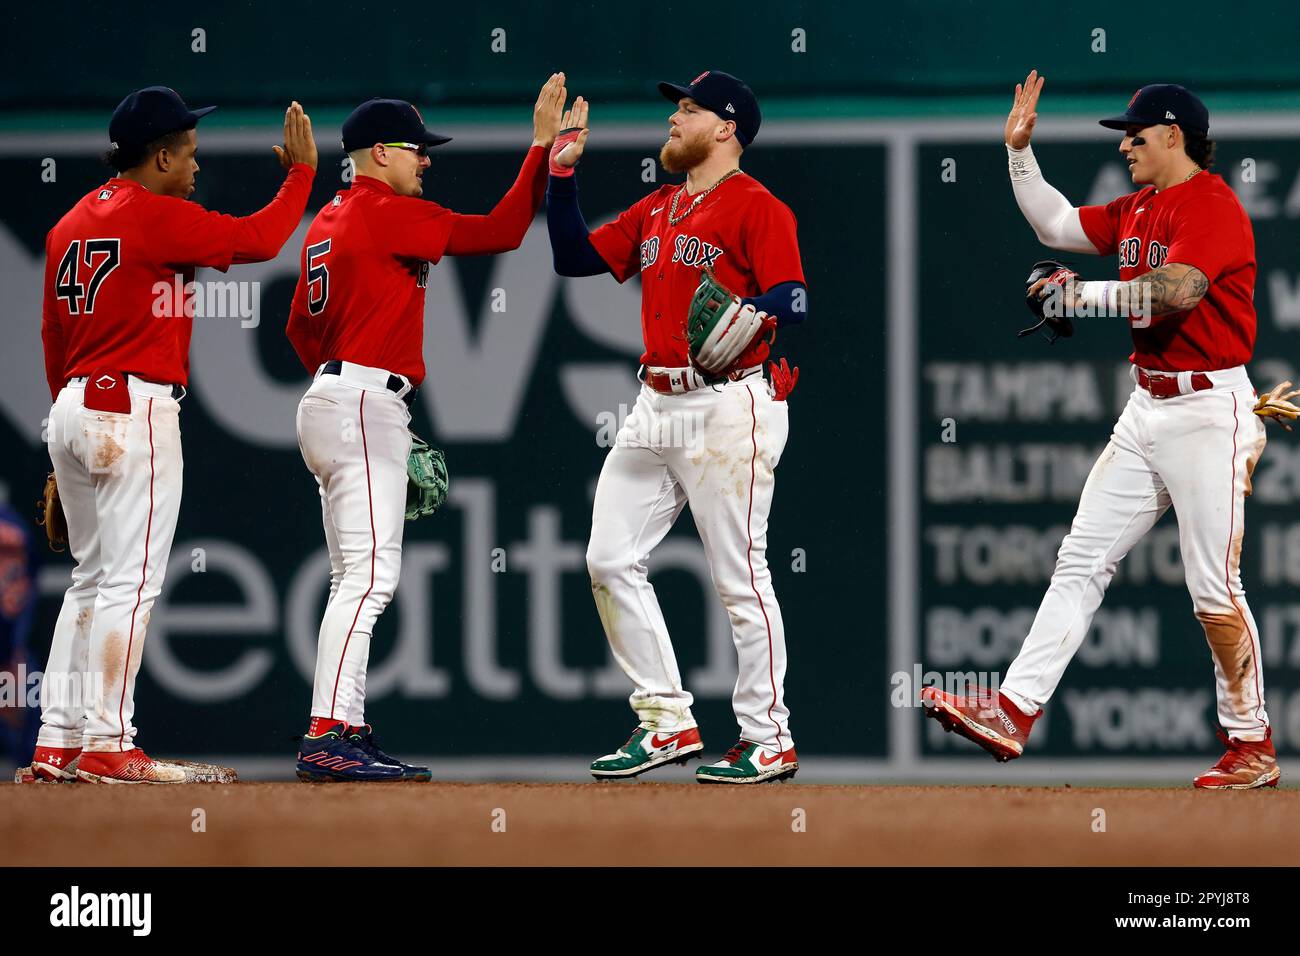 Boston Red Sox players, from left, Enmanuel Valdez, Enrique